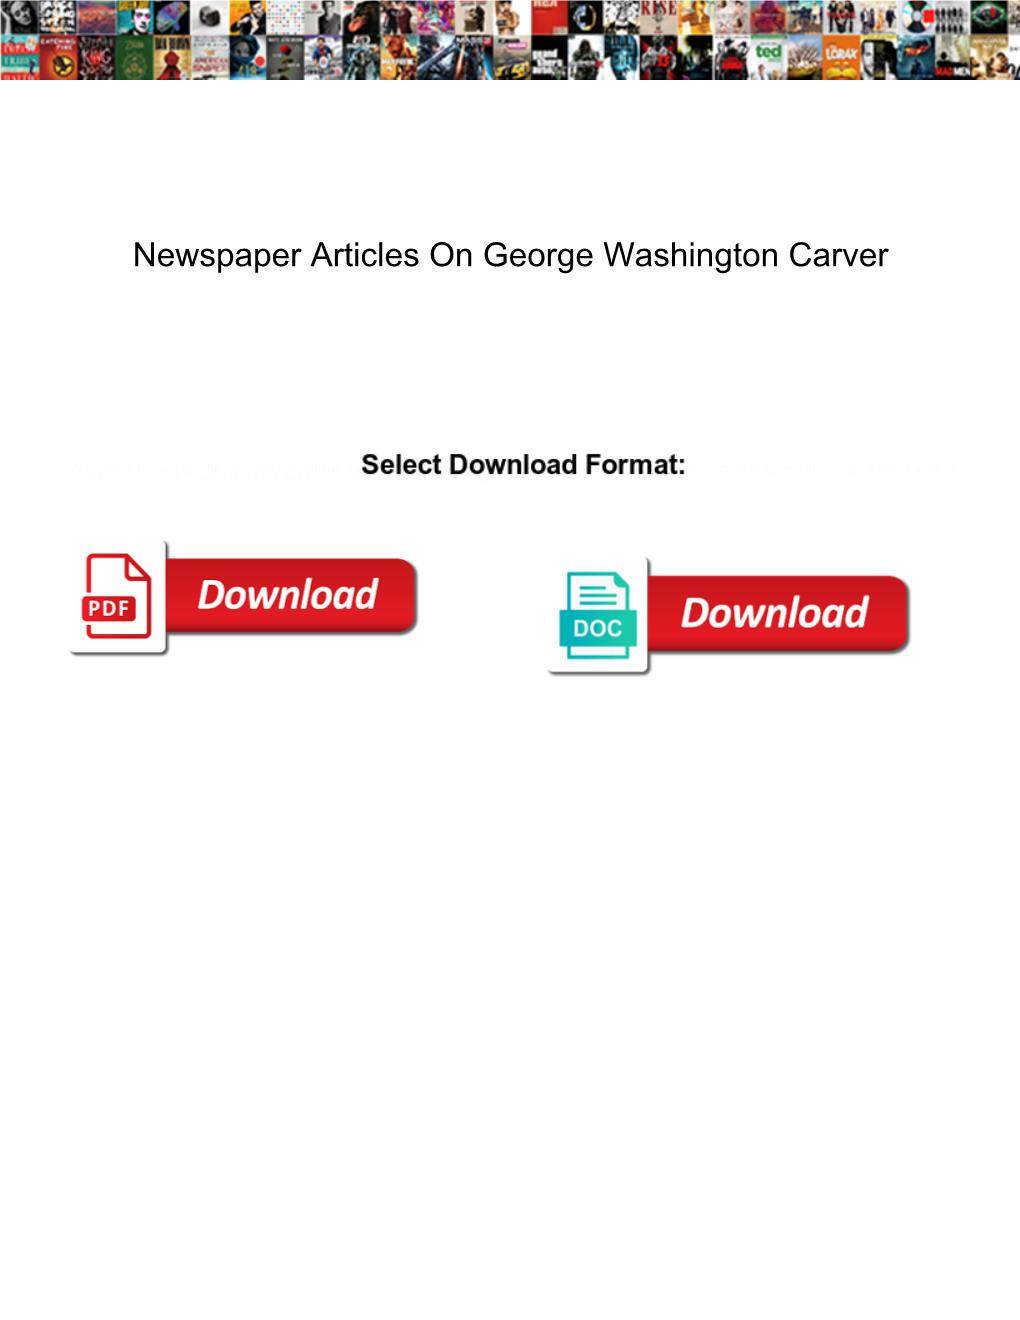 Newspaper Articles on George Washington Carver